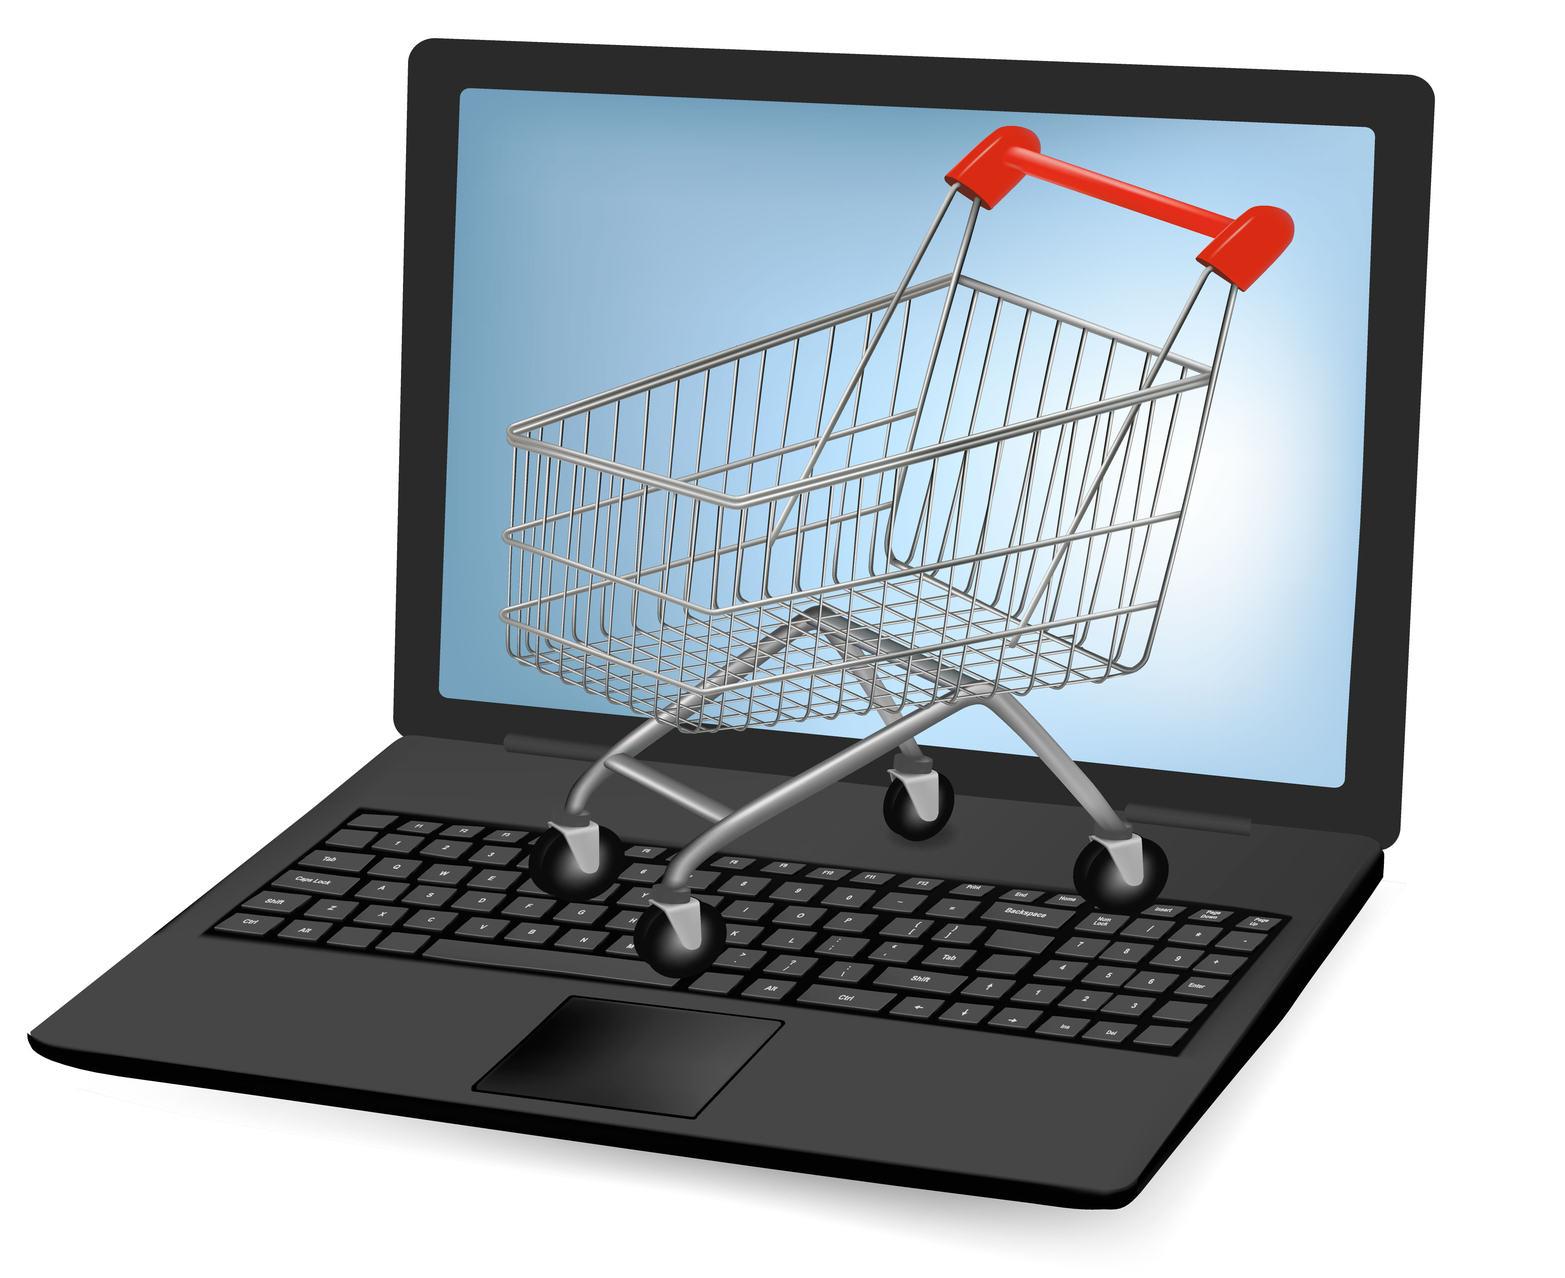 Regulamin sklepu internetowego w modelu dropshipping